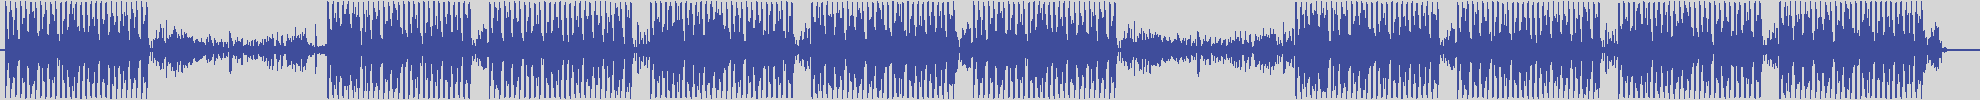 nf_boyz_records [NFY081] Tony Trumpetta - Black Shirt [7000 Miles Mix] audio wave form